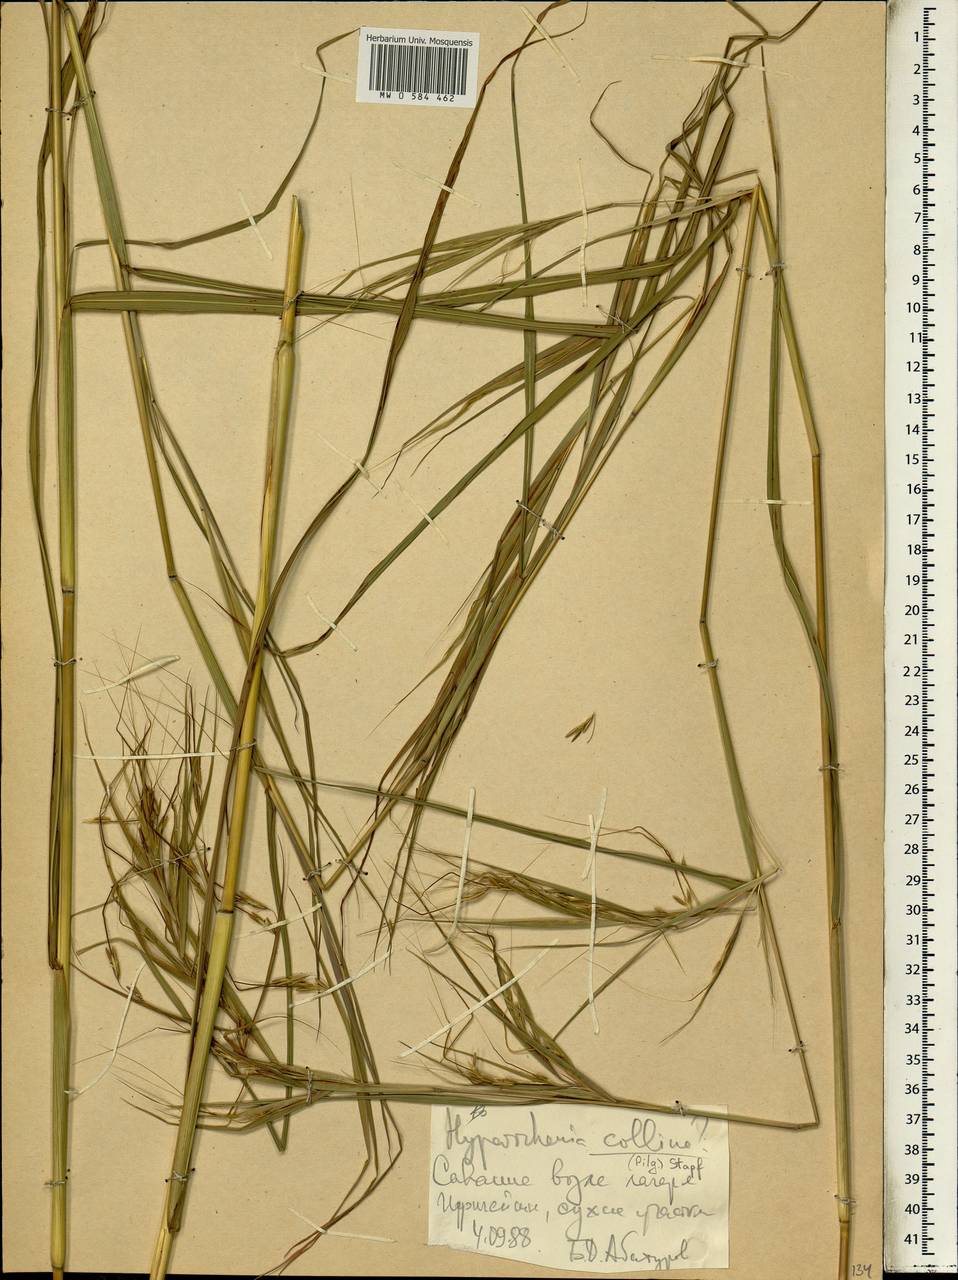 Hyparrhenia collina (Pilg.) Stapf, Африка (AFR) (Эфиопия)